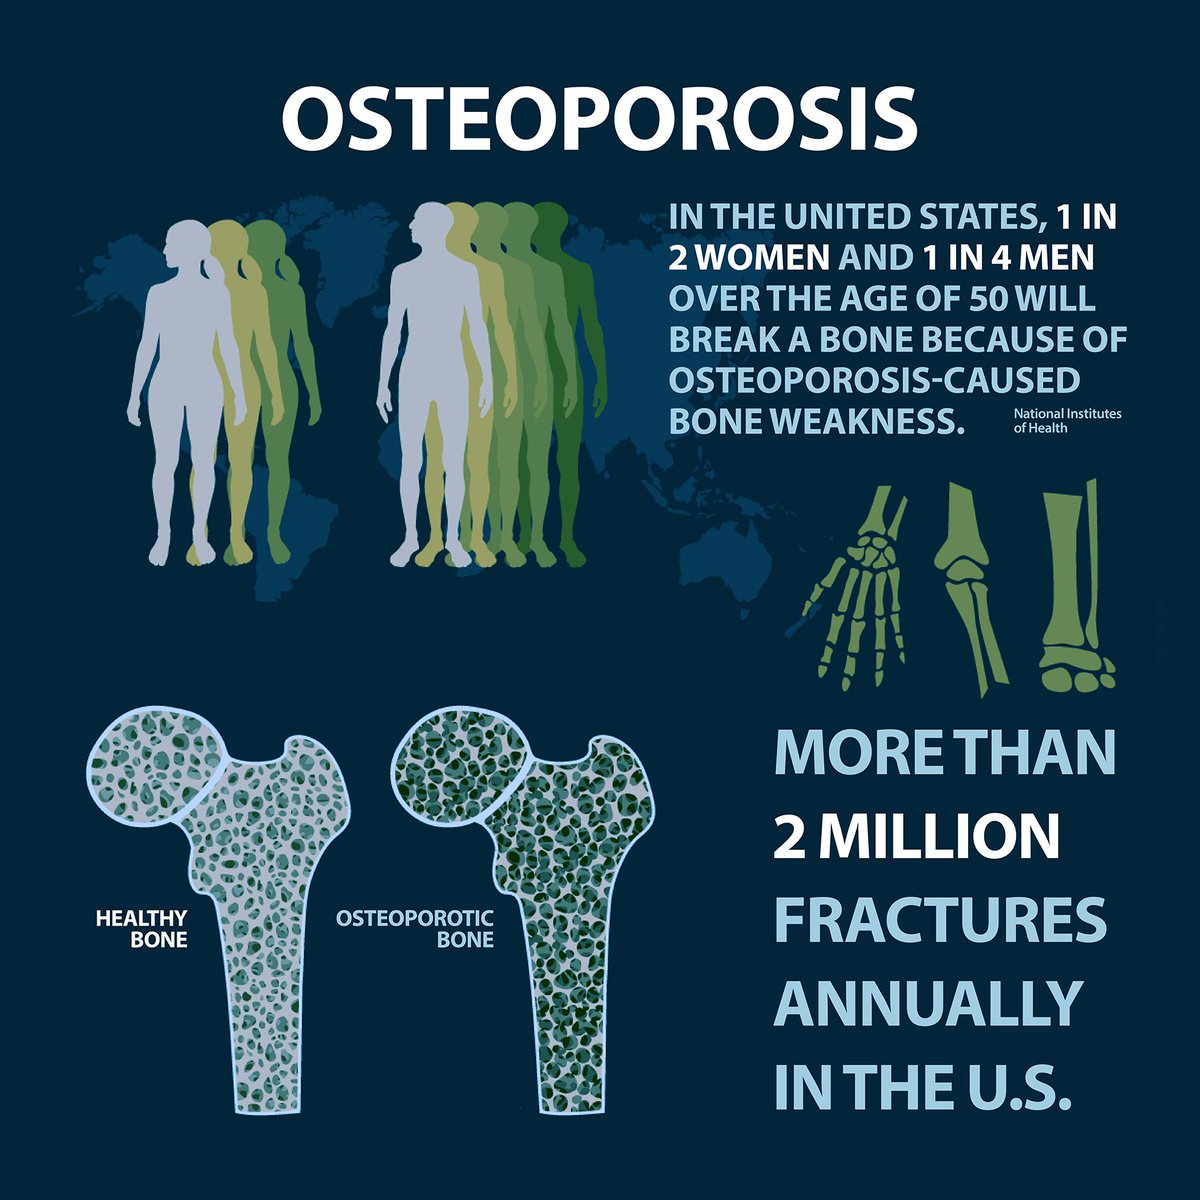 🦴 Aging increases osteoporosis risk. 📊 Get a bone density test for bone health after 50. #HealthChecks #OsteoporosisPrevention